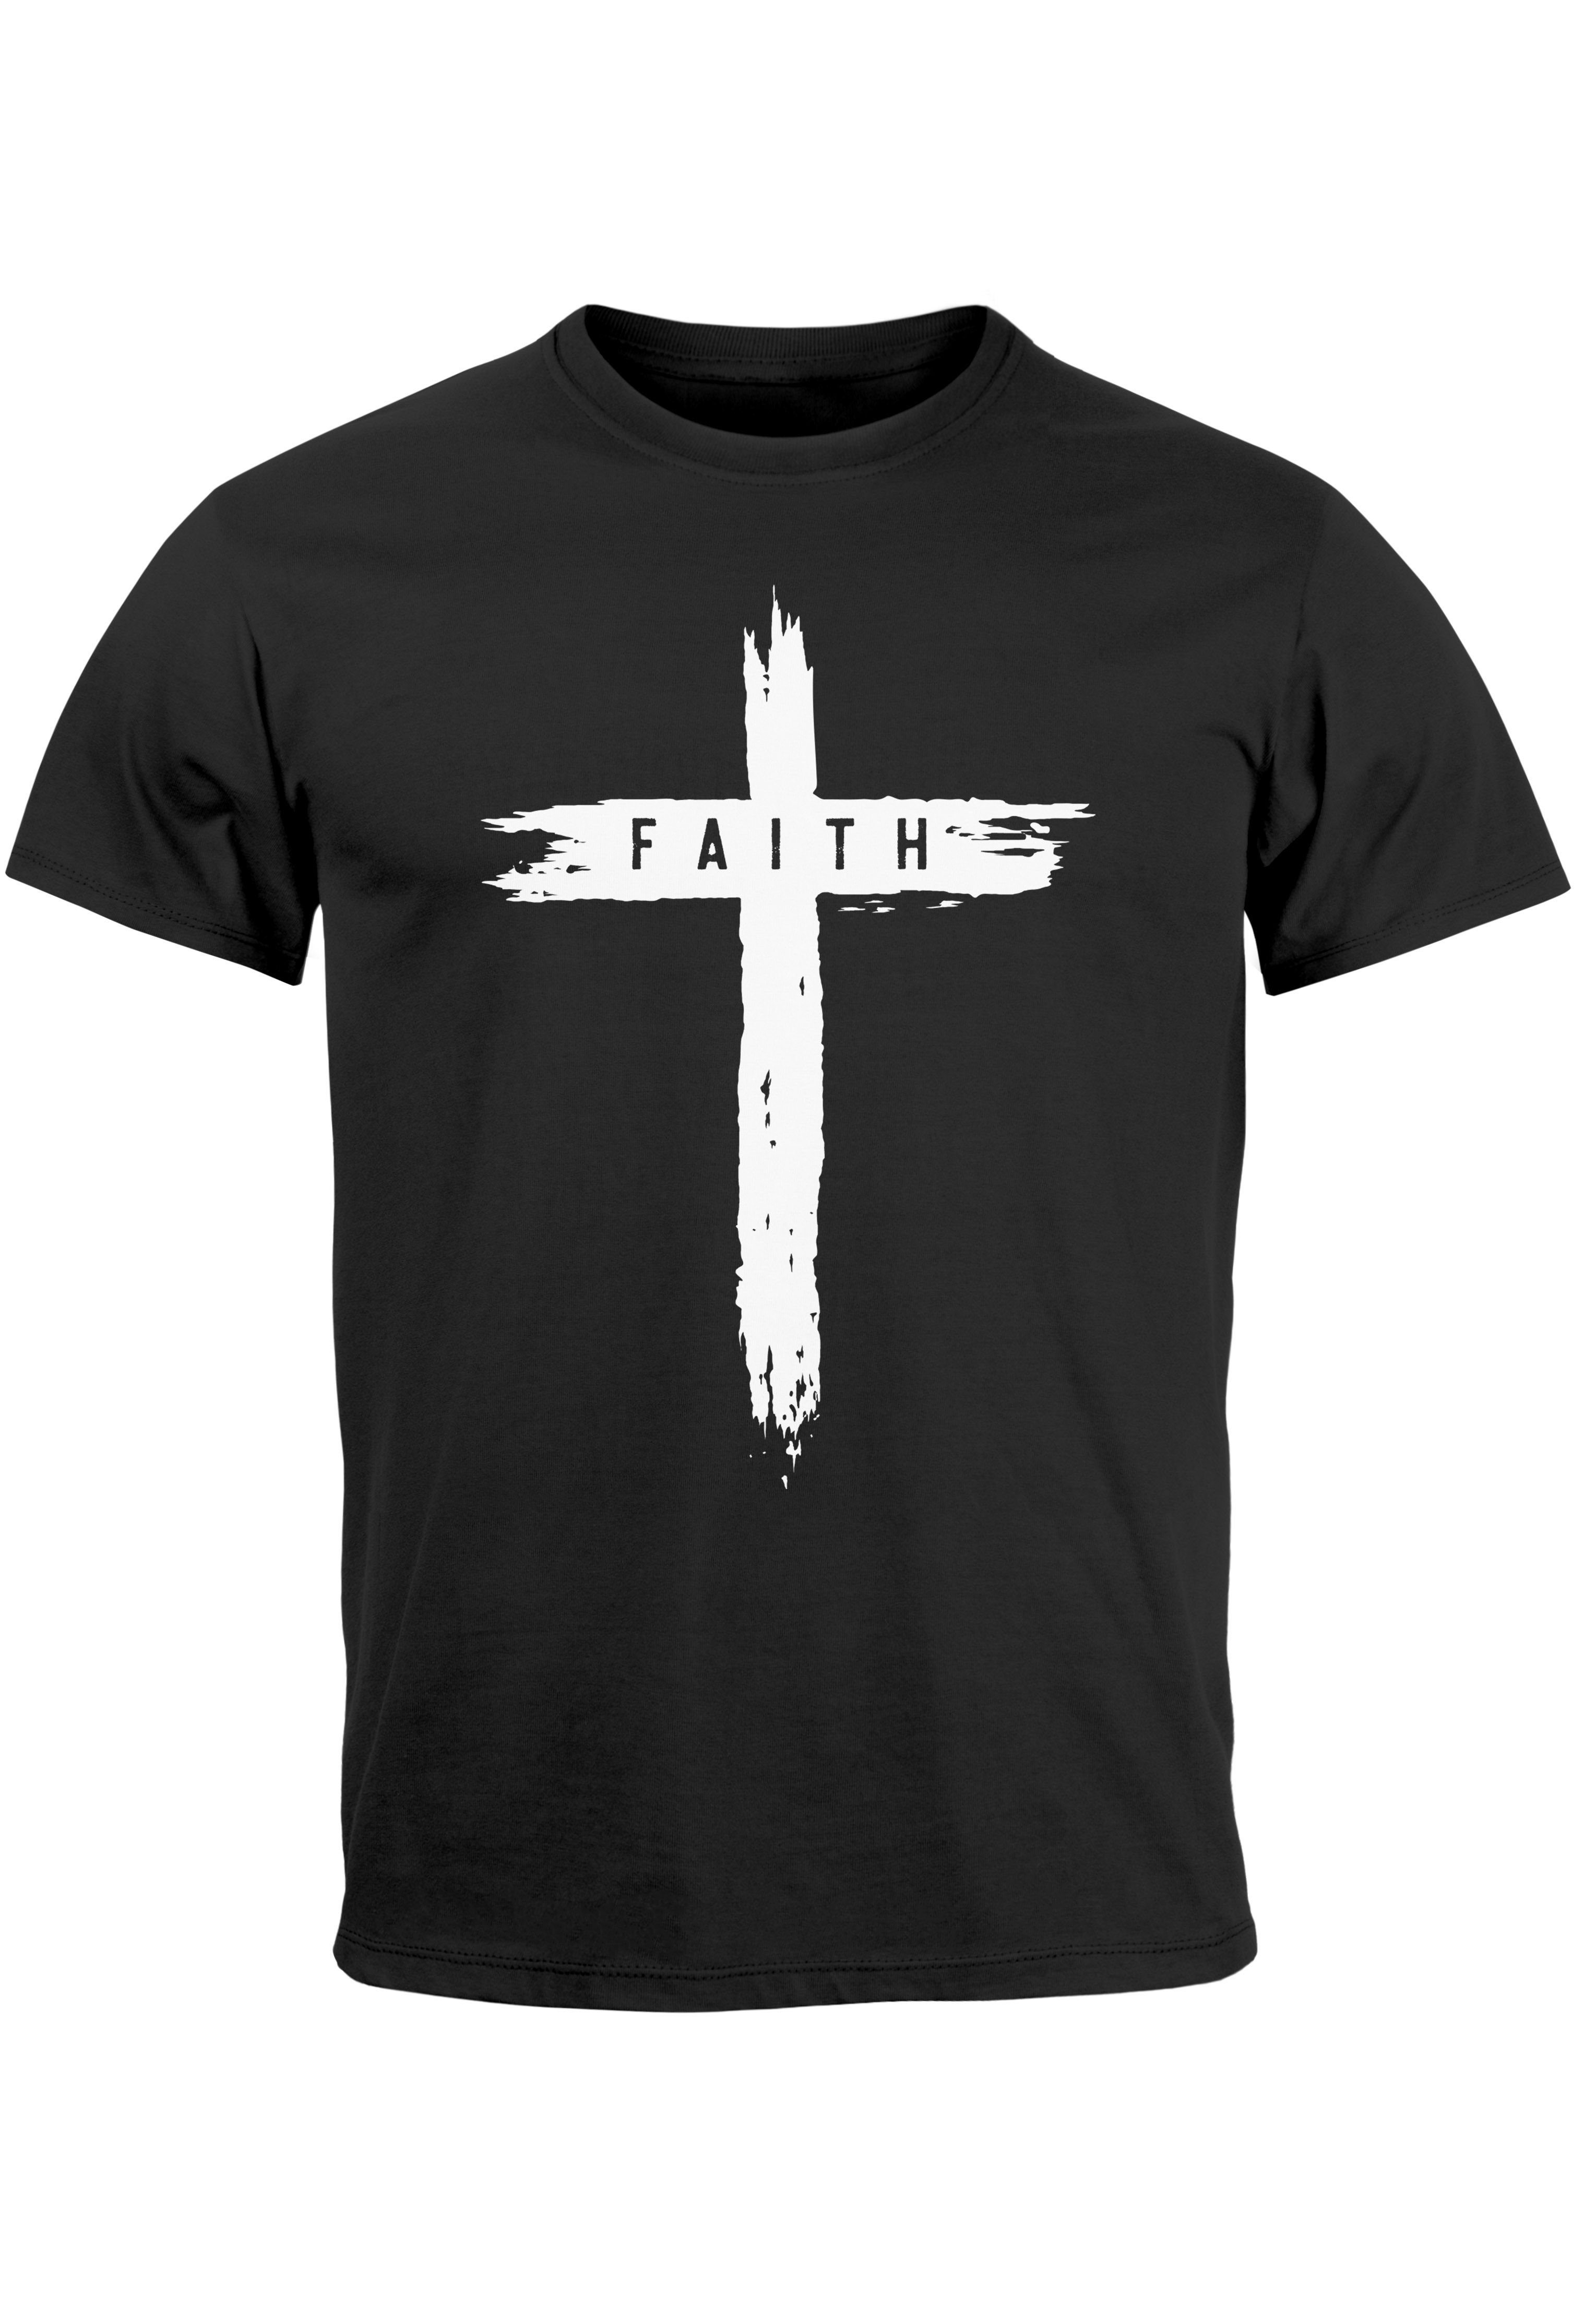 Neverless Print-Shirt Herren T-Shirt Printshirt Aufdruck Kreuz Cross Faith Glaube Trend-Moti mit Print schwarz